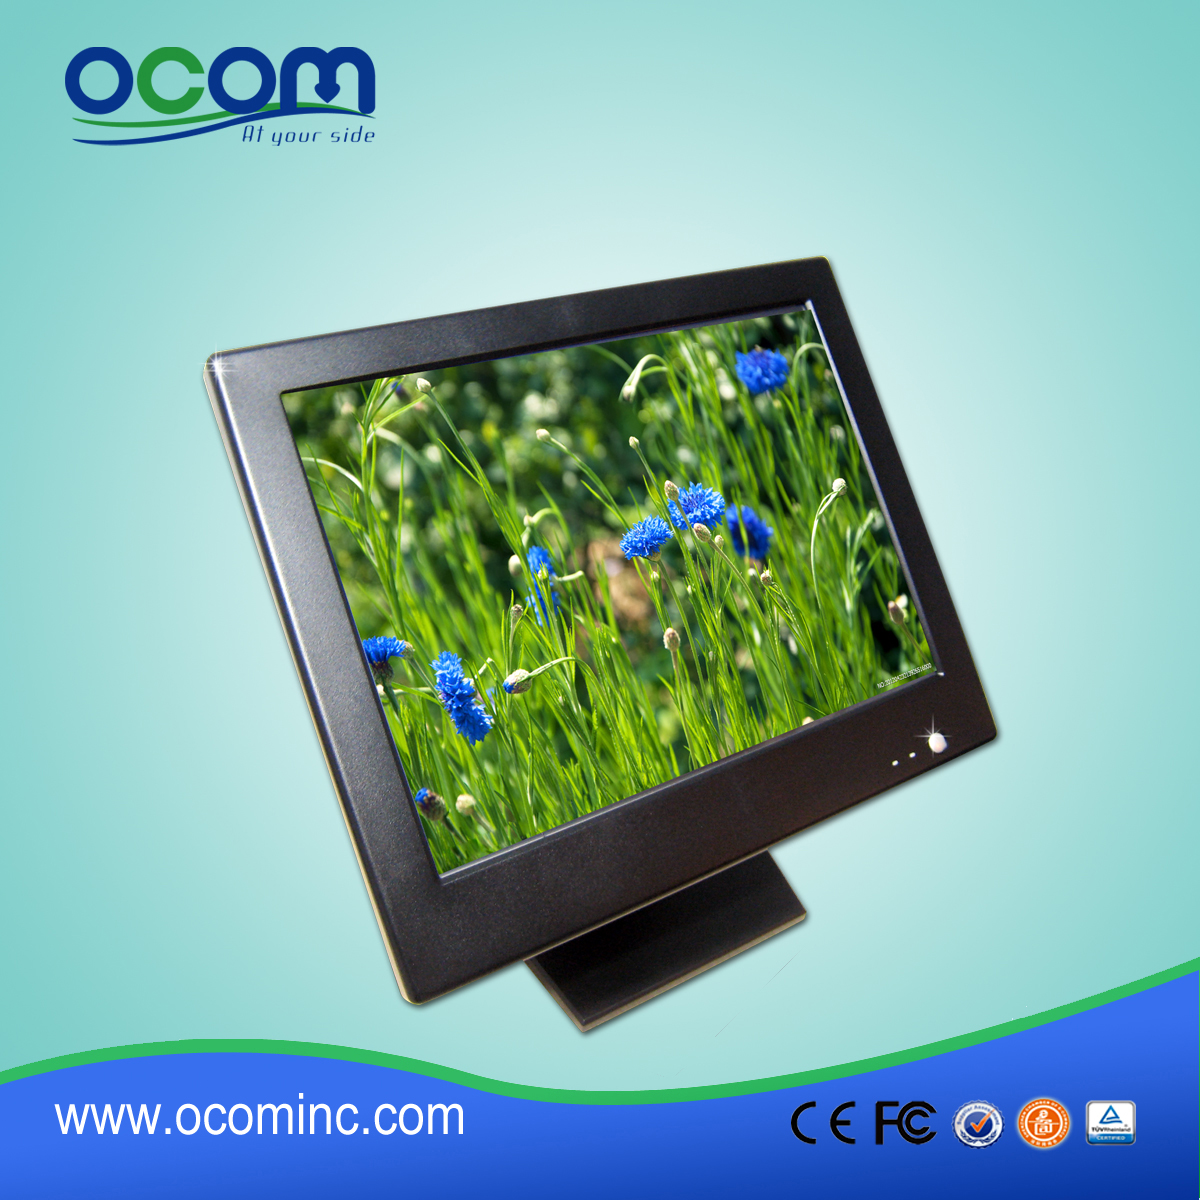 TM1502   High Brightness Cheap LCD Monitor For Sales